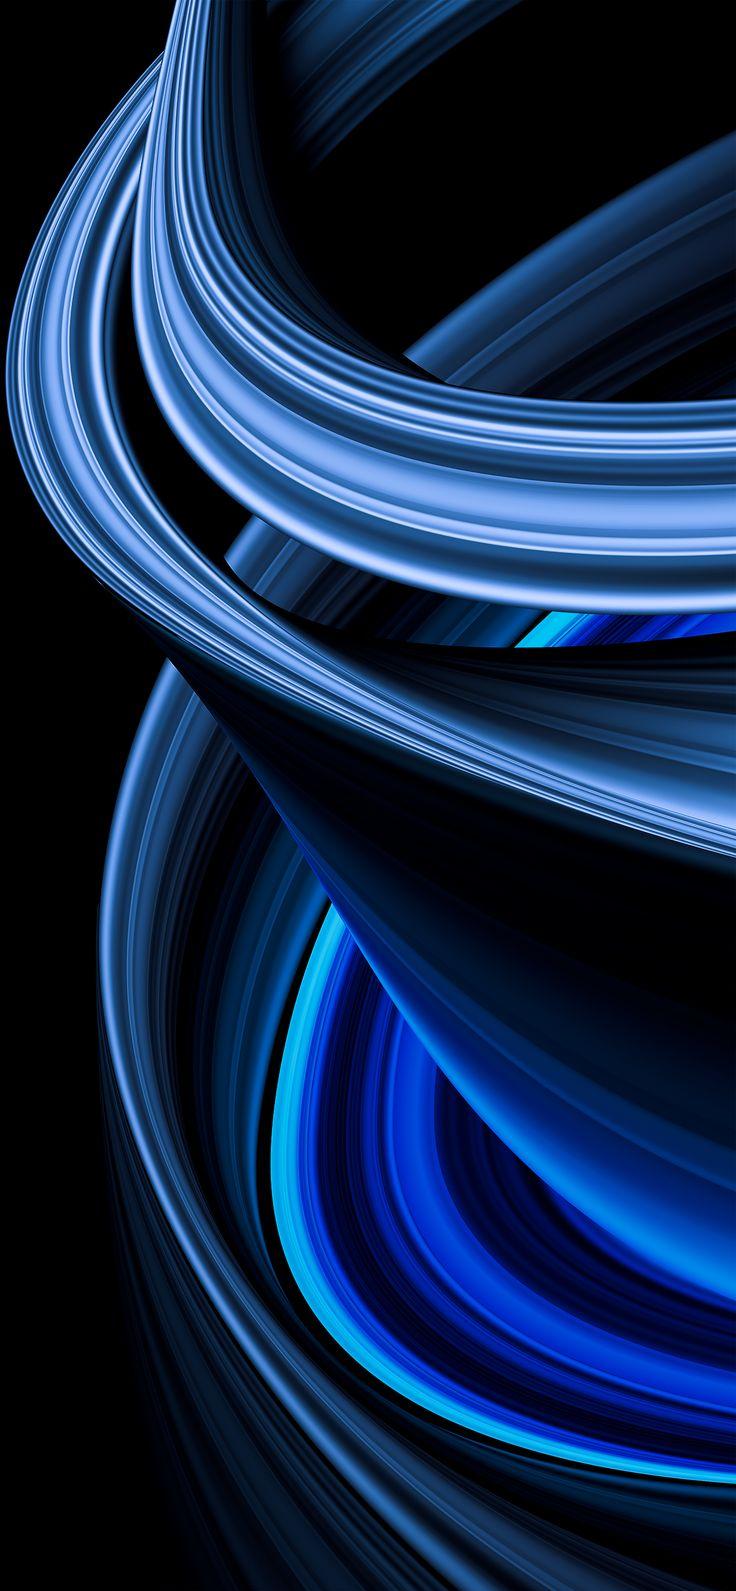 Abstract Blue Wrap By Evgeniyzemelko Motorola Wallpaper Black